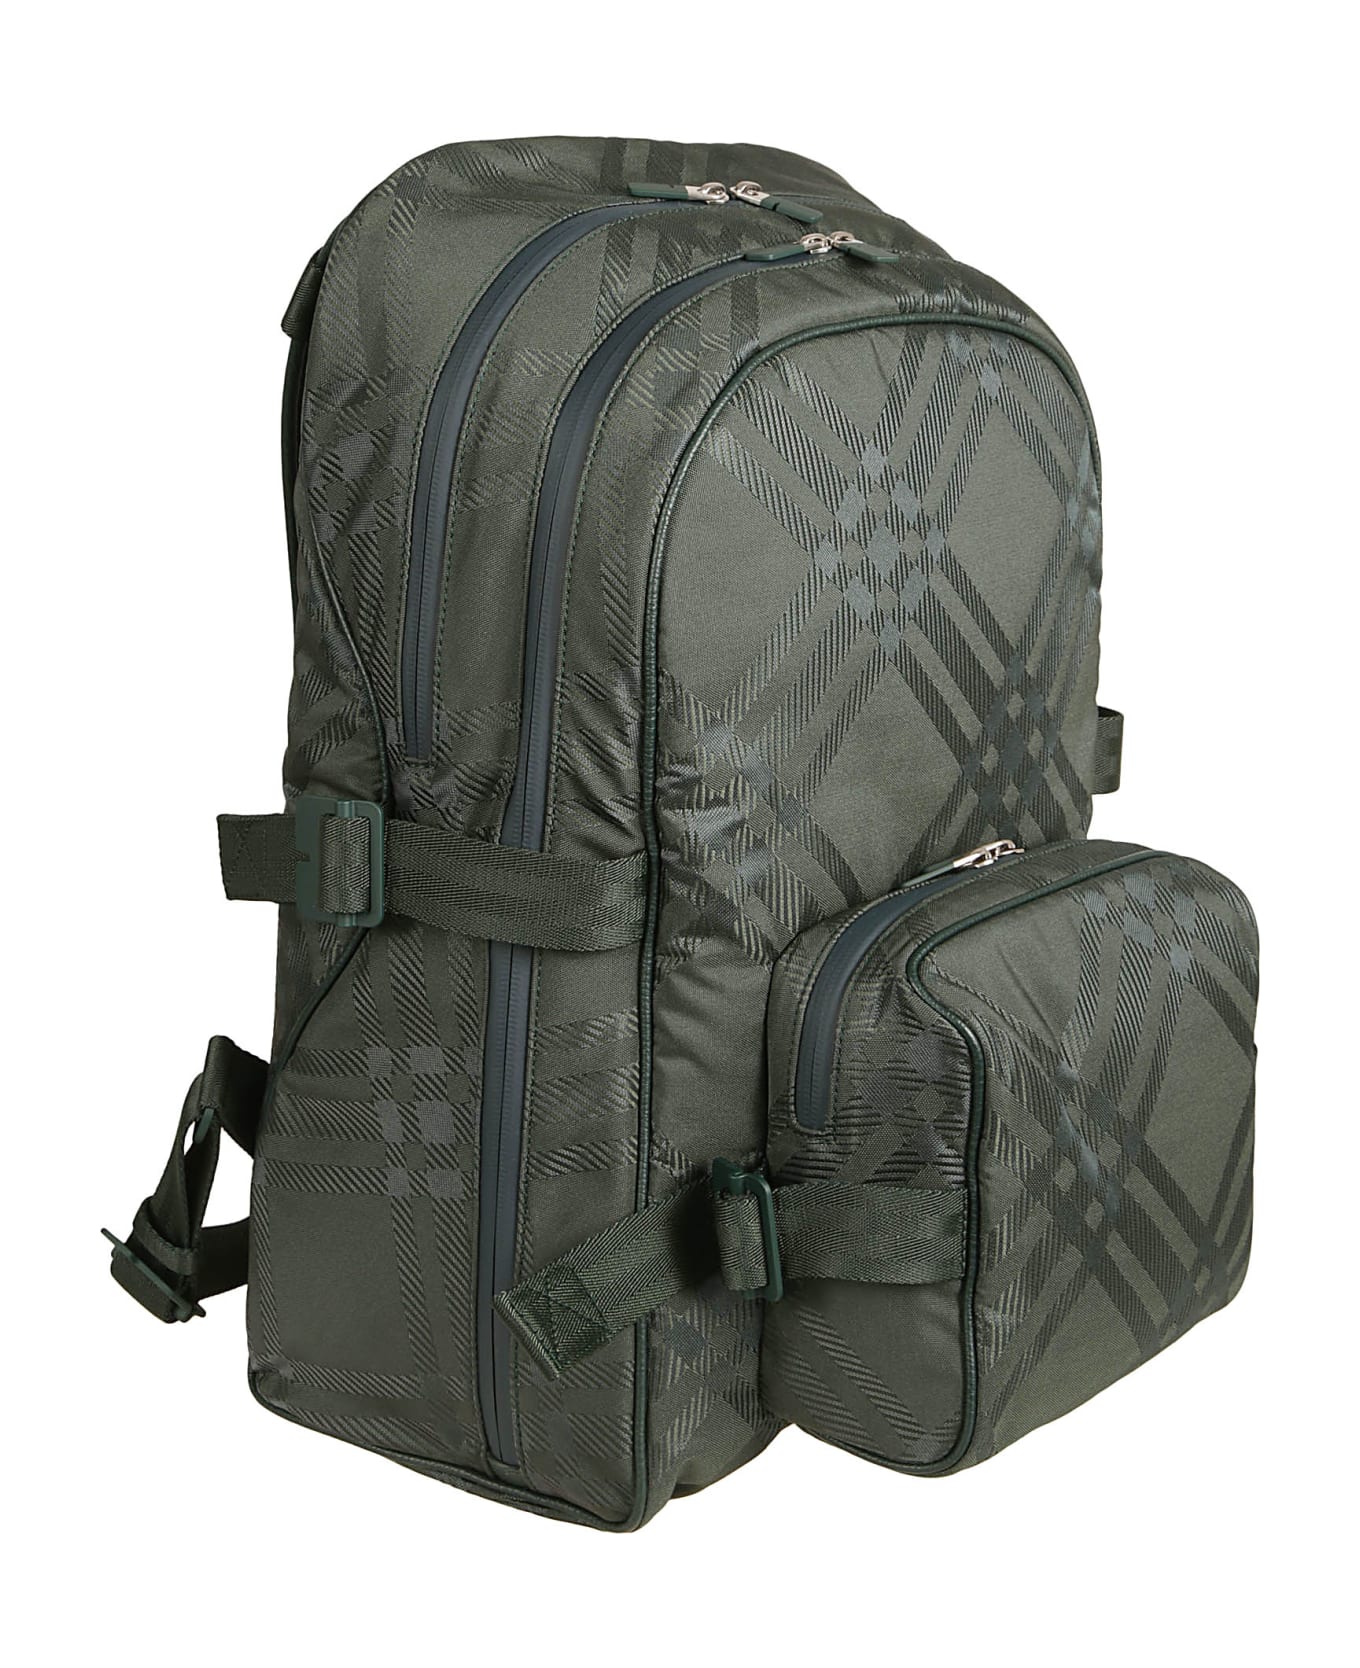 Burberry Check Patterned Backpack - Vine バックパック